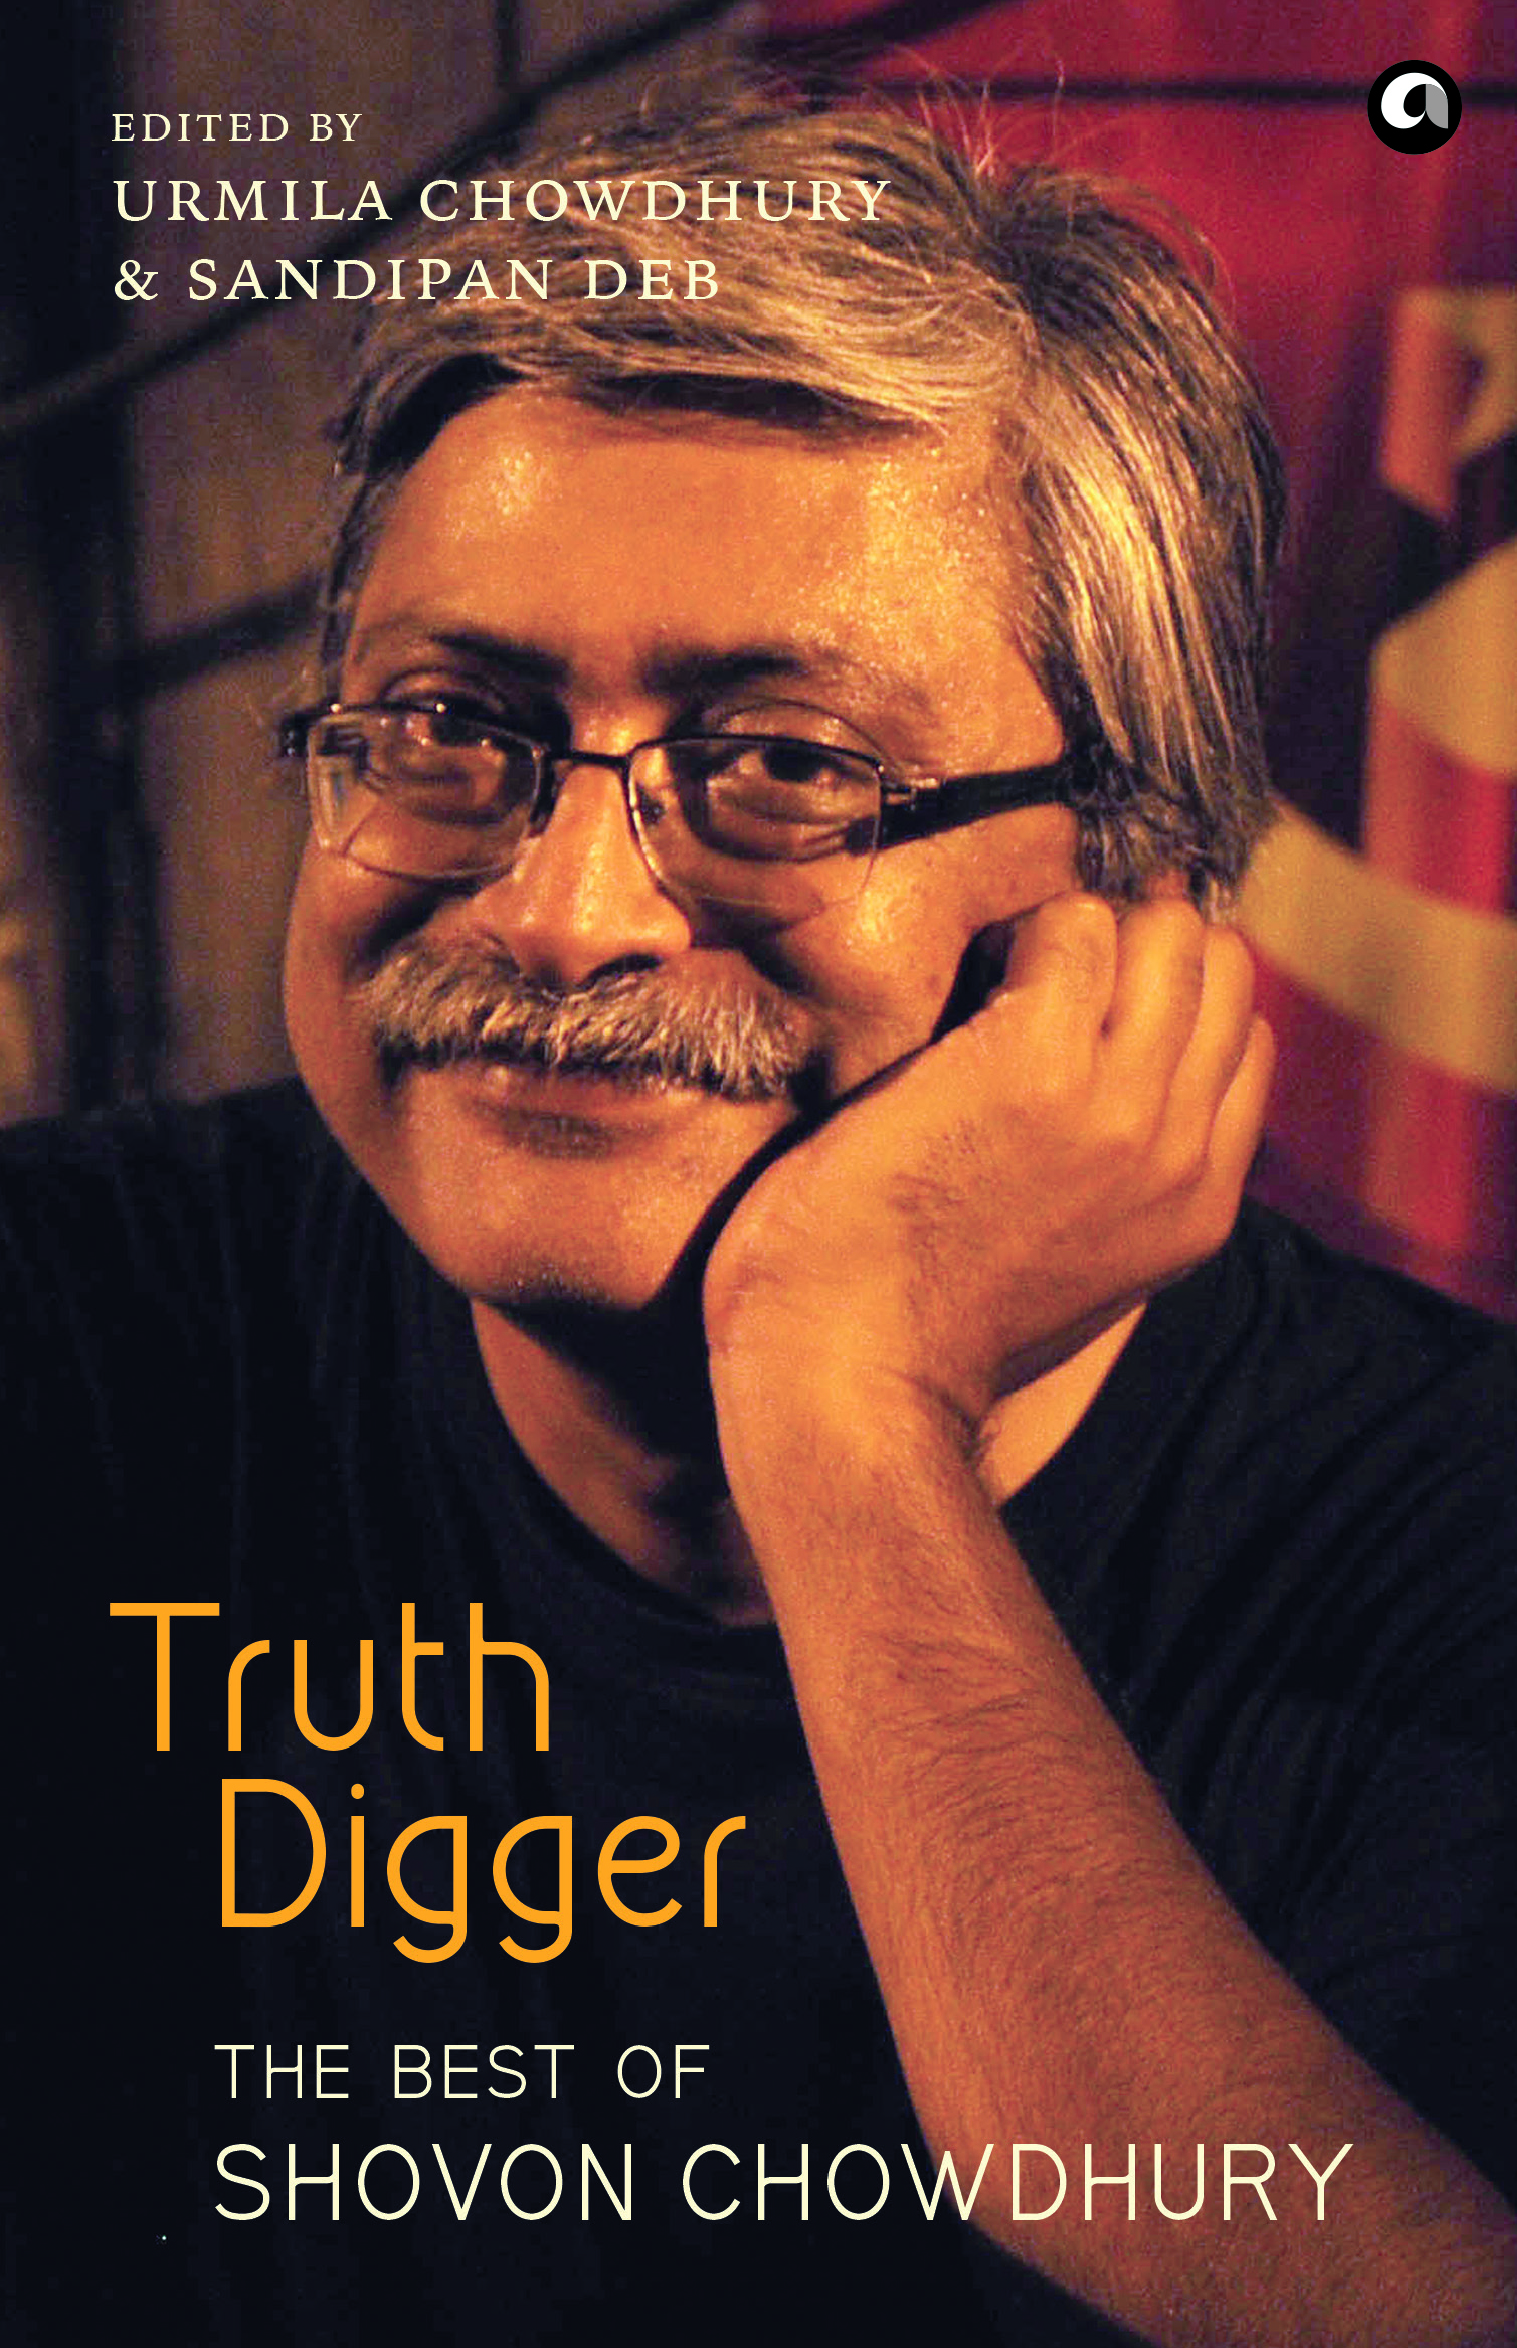 Truth Digger: The Best of Shovon Chowdhury | Edited by Urmila Chowdhury and Sandipan Deb